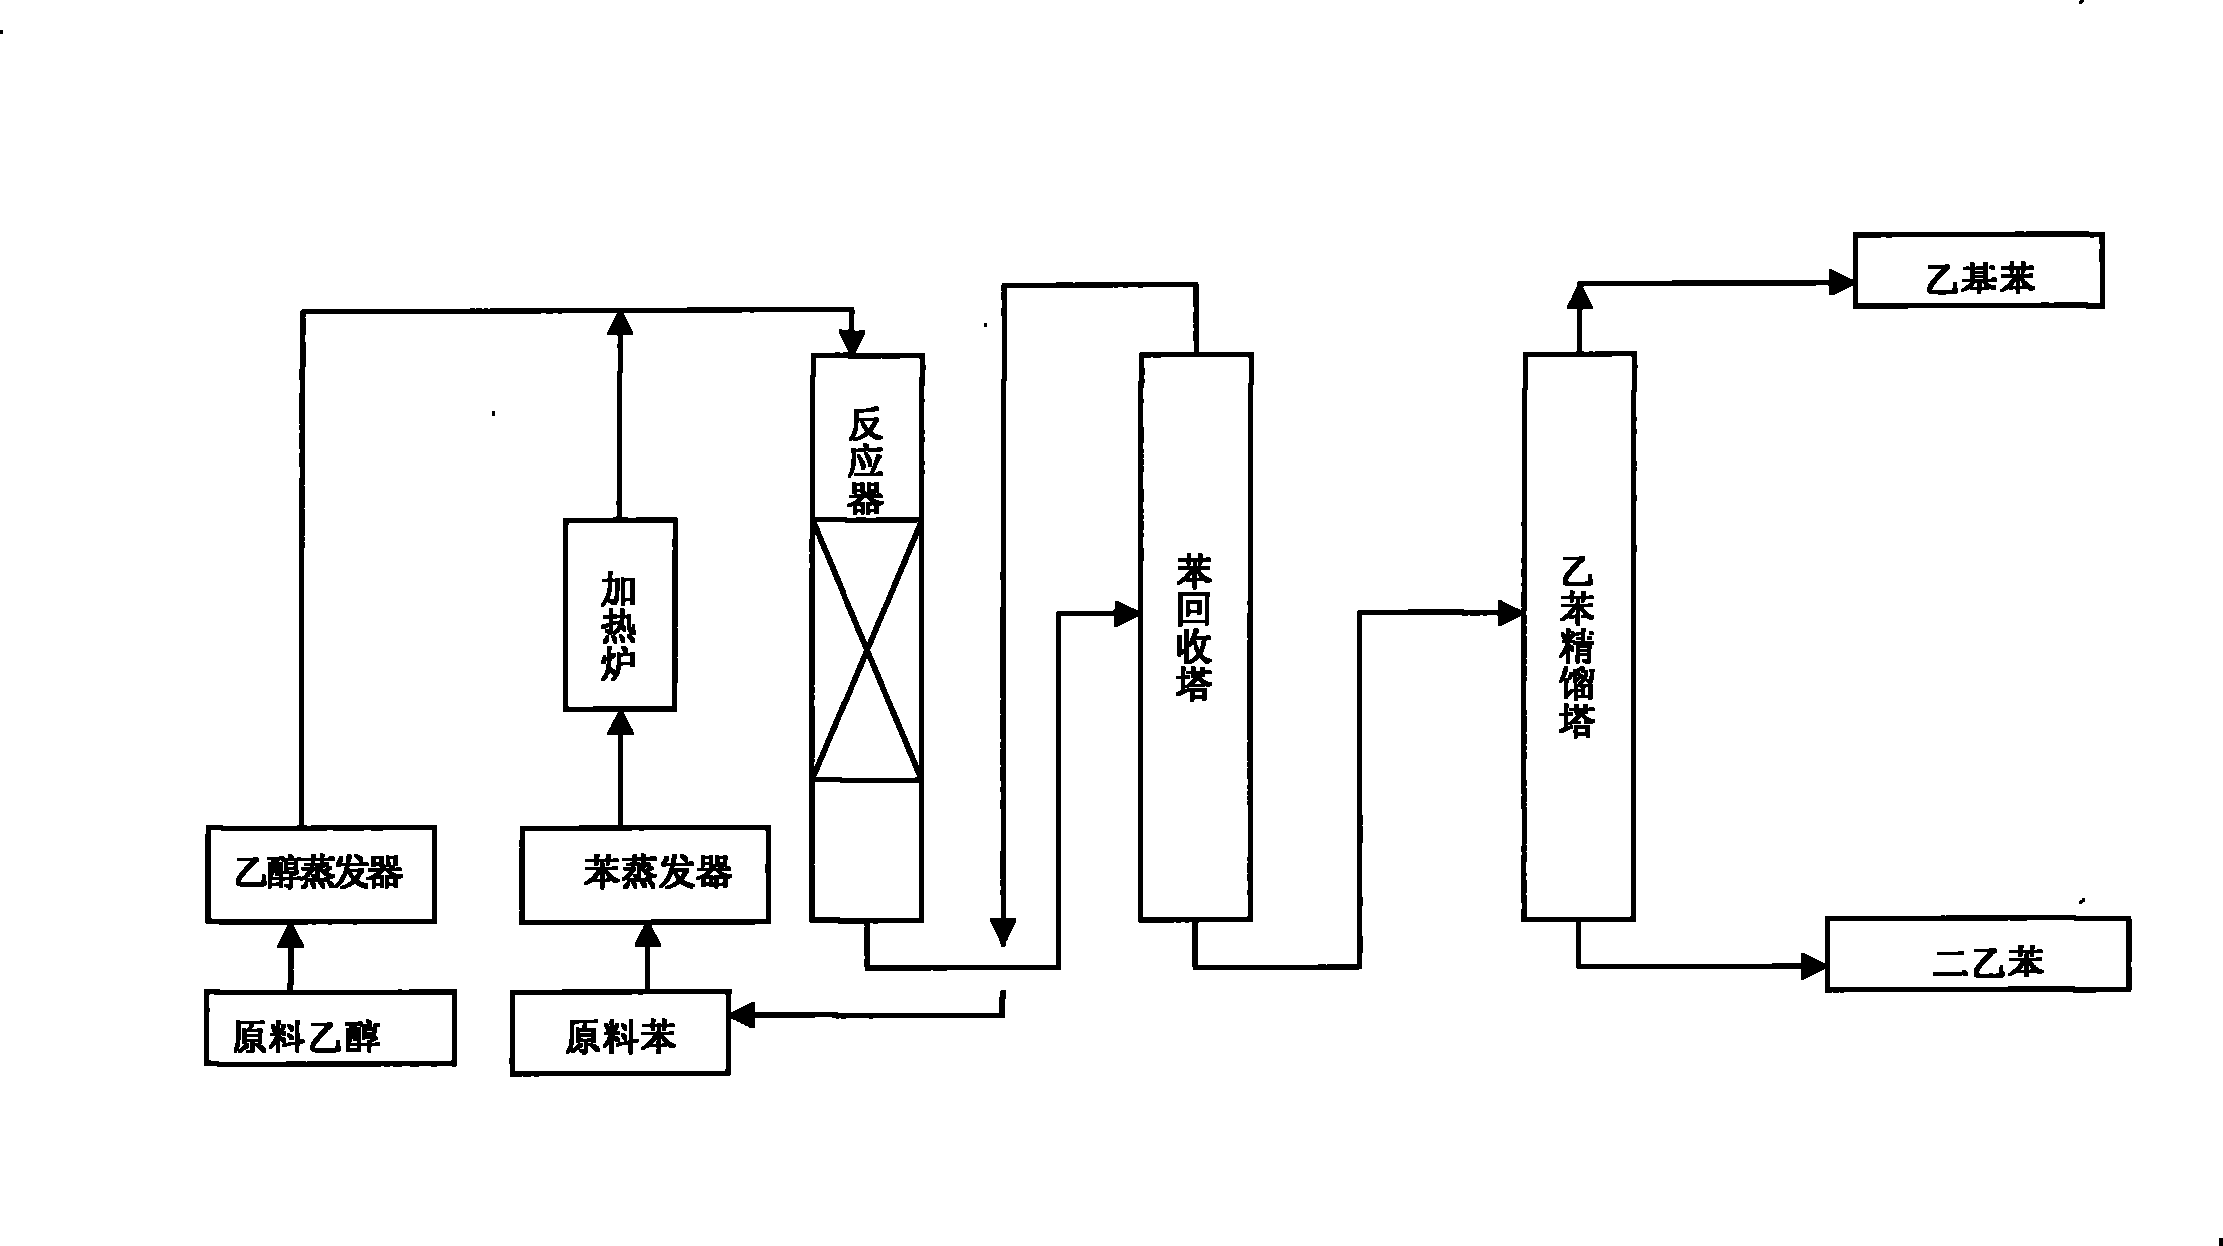 Method for synthesizing ethyl benzene and diethyl benzene